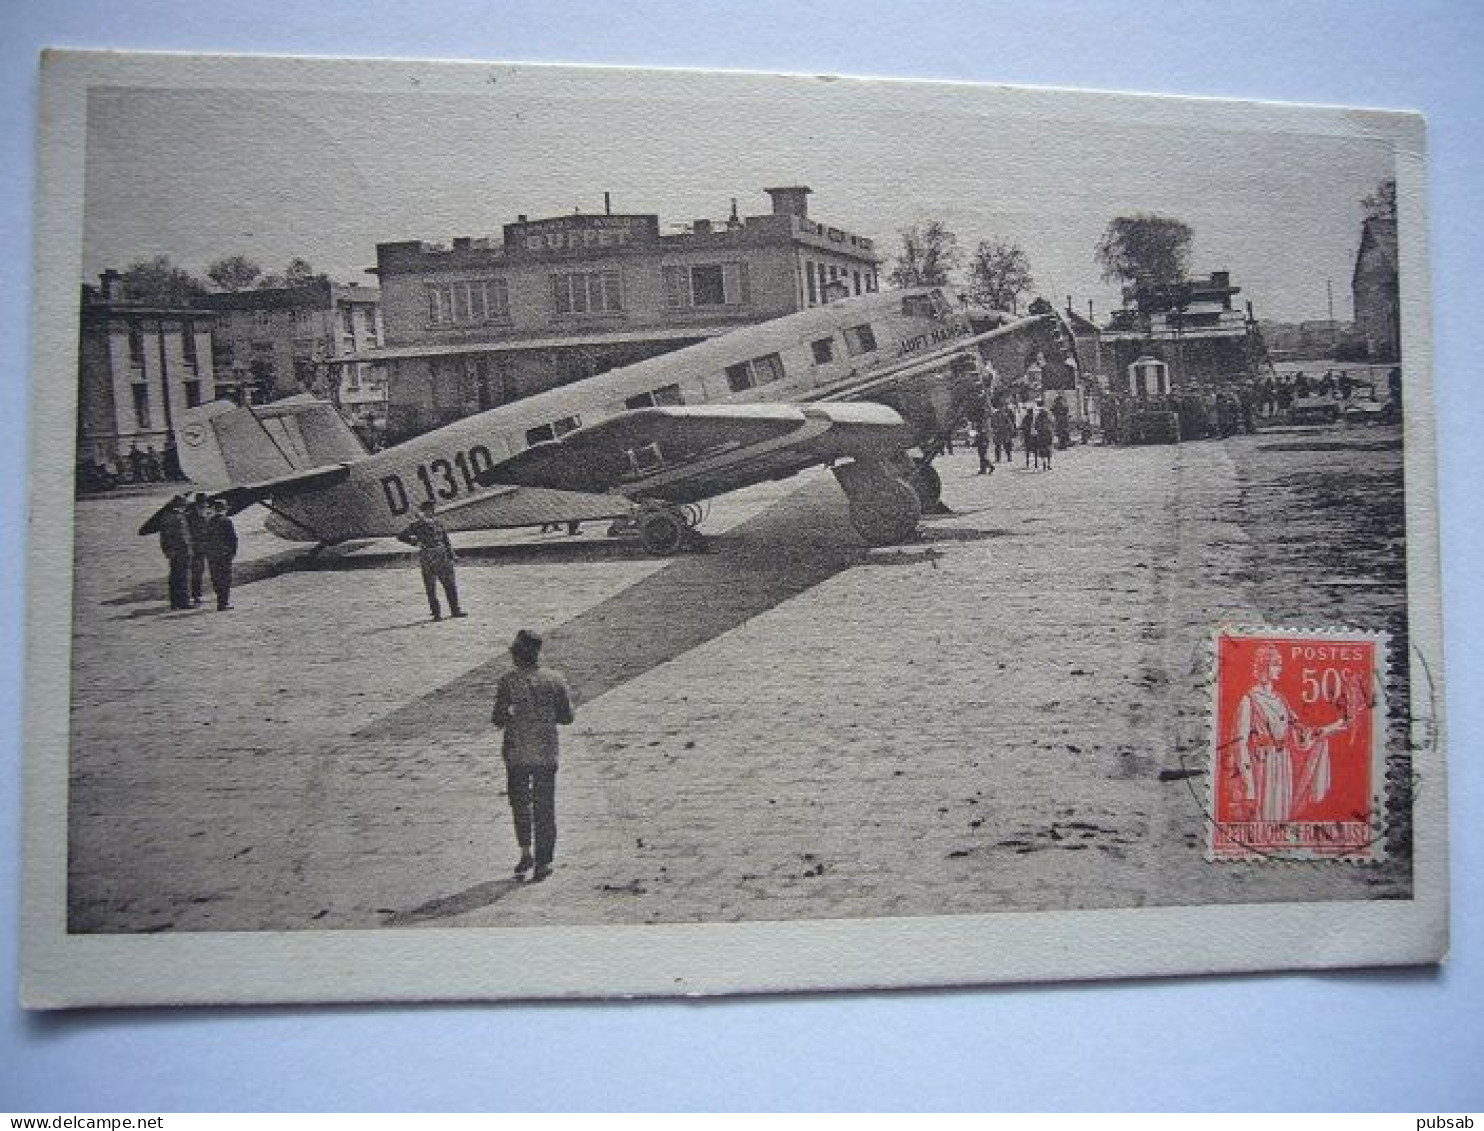 Avion / Airplane / LUFTHANSA / Junkers G. 31 - 1919-1938: Fra Le Due Guerre